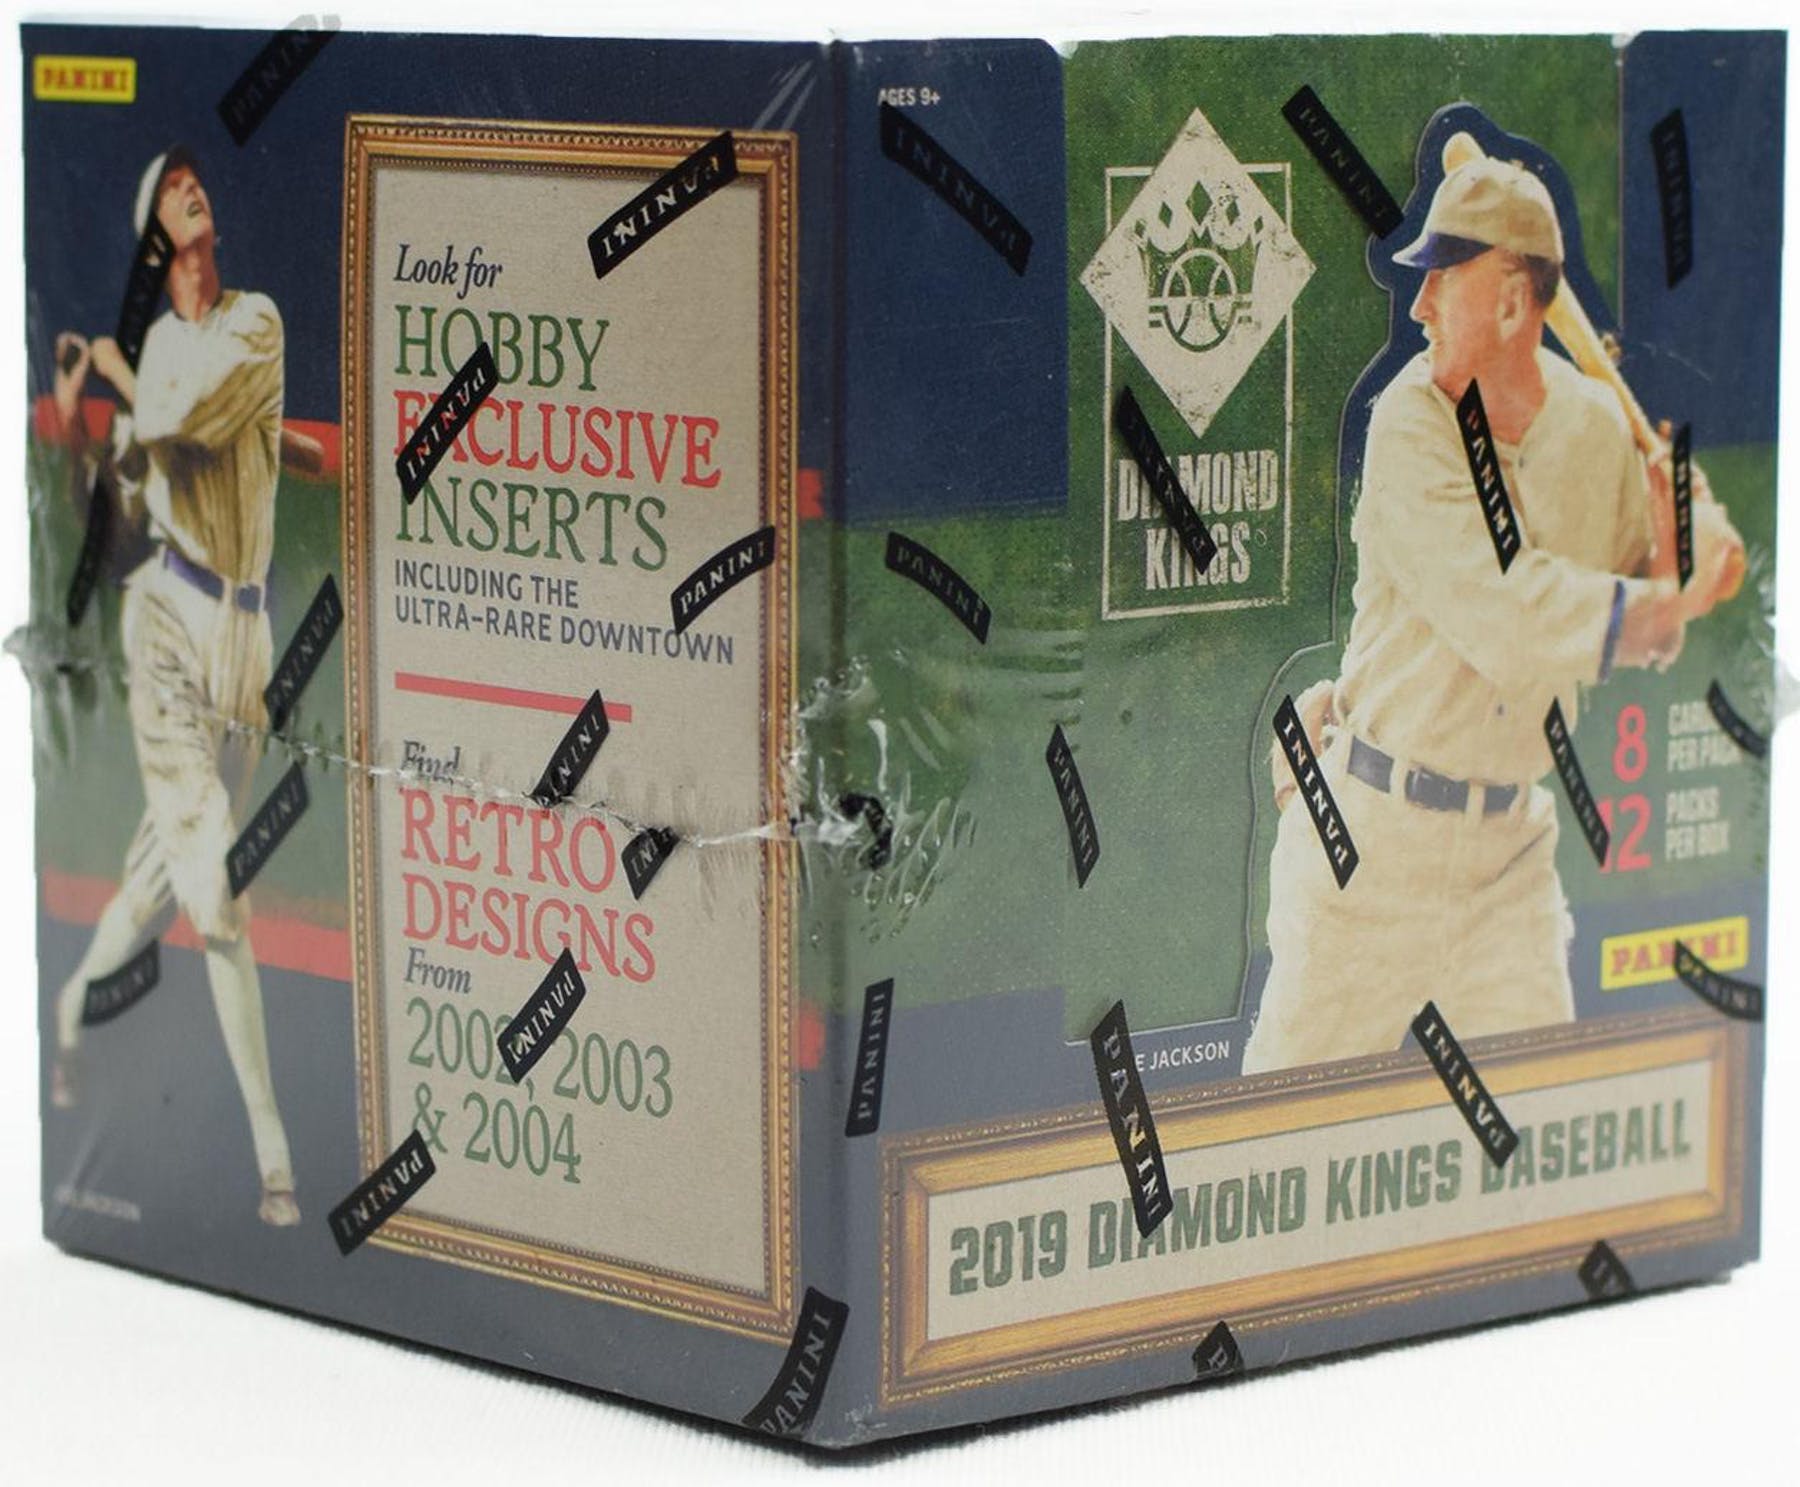 2019 Panini Diamond Kings Baseball Hobby Box - BigBoi Cards